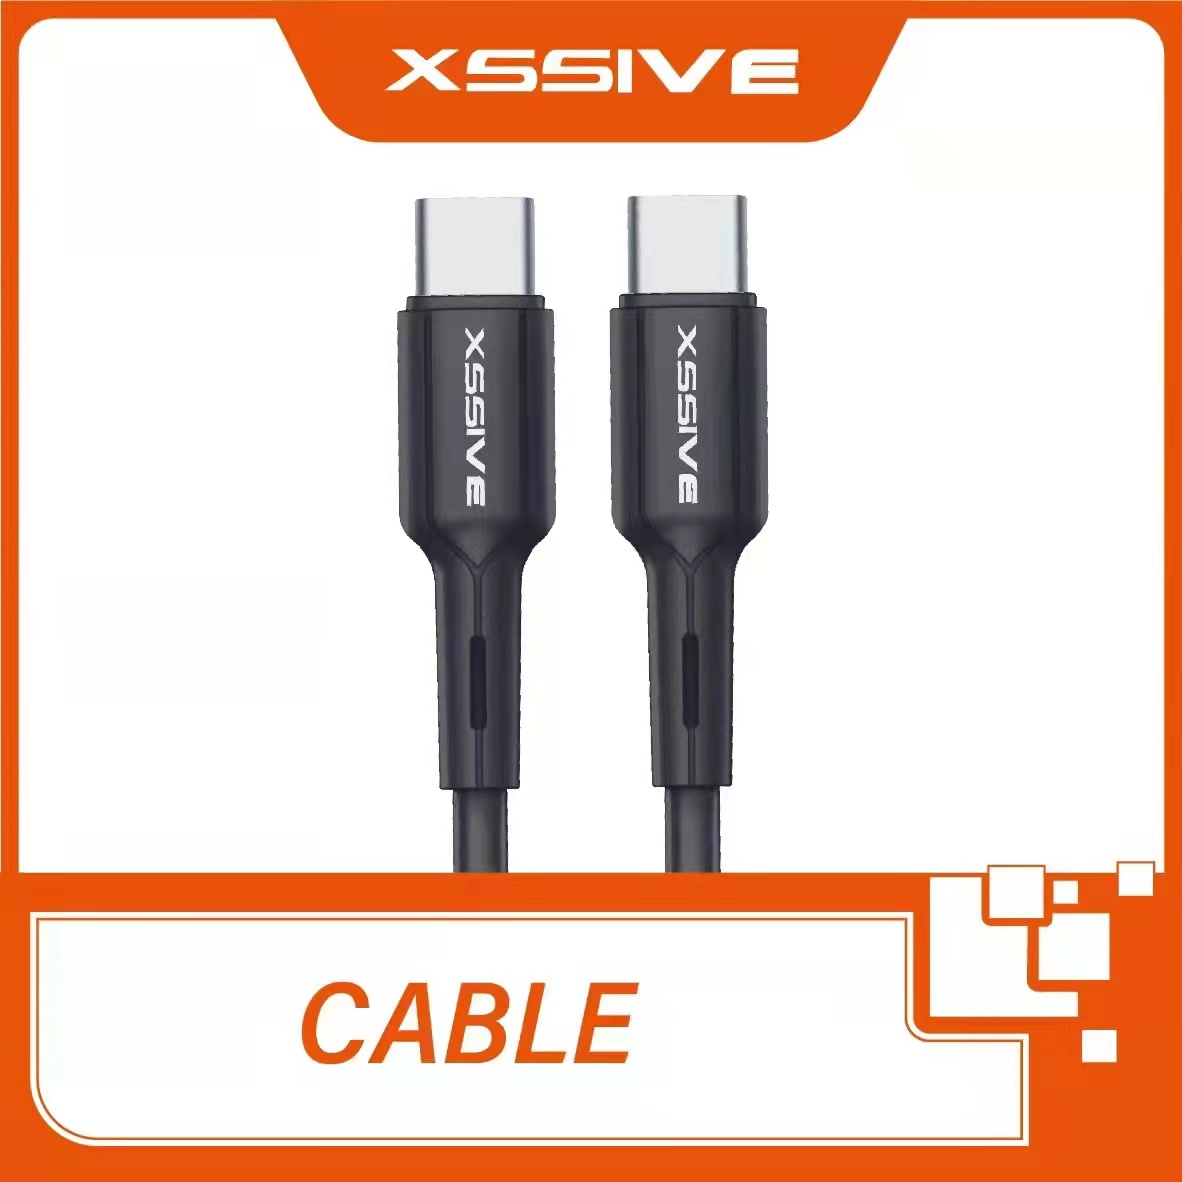 Xssive - Cables